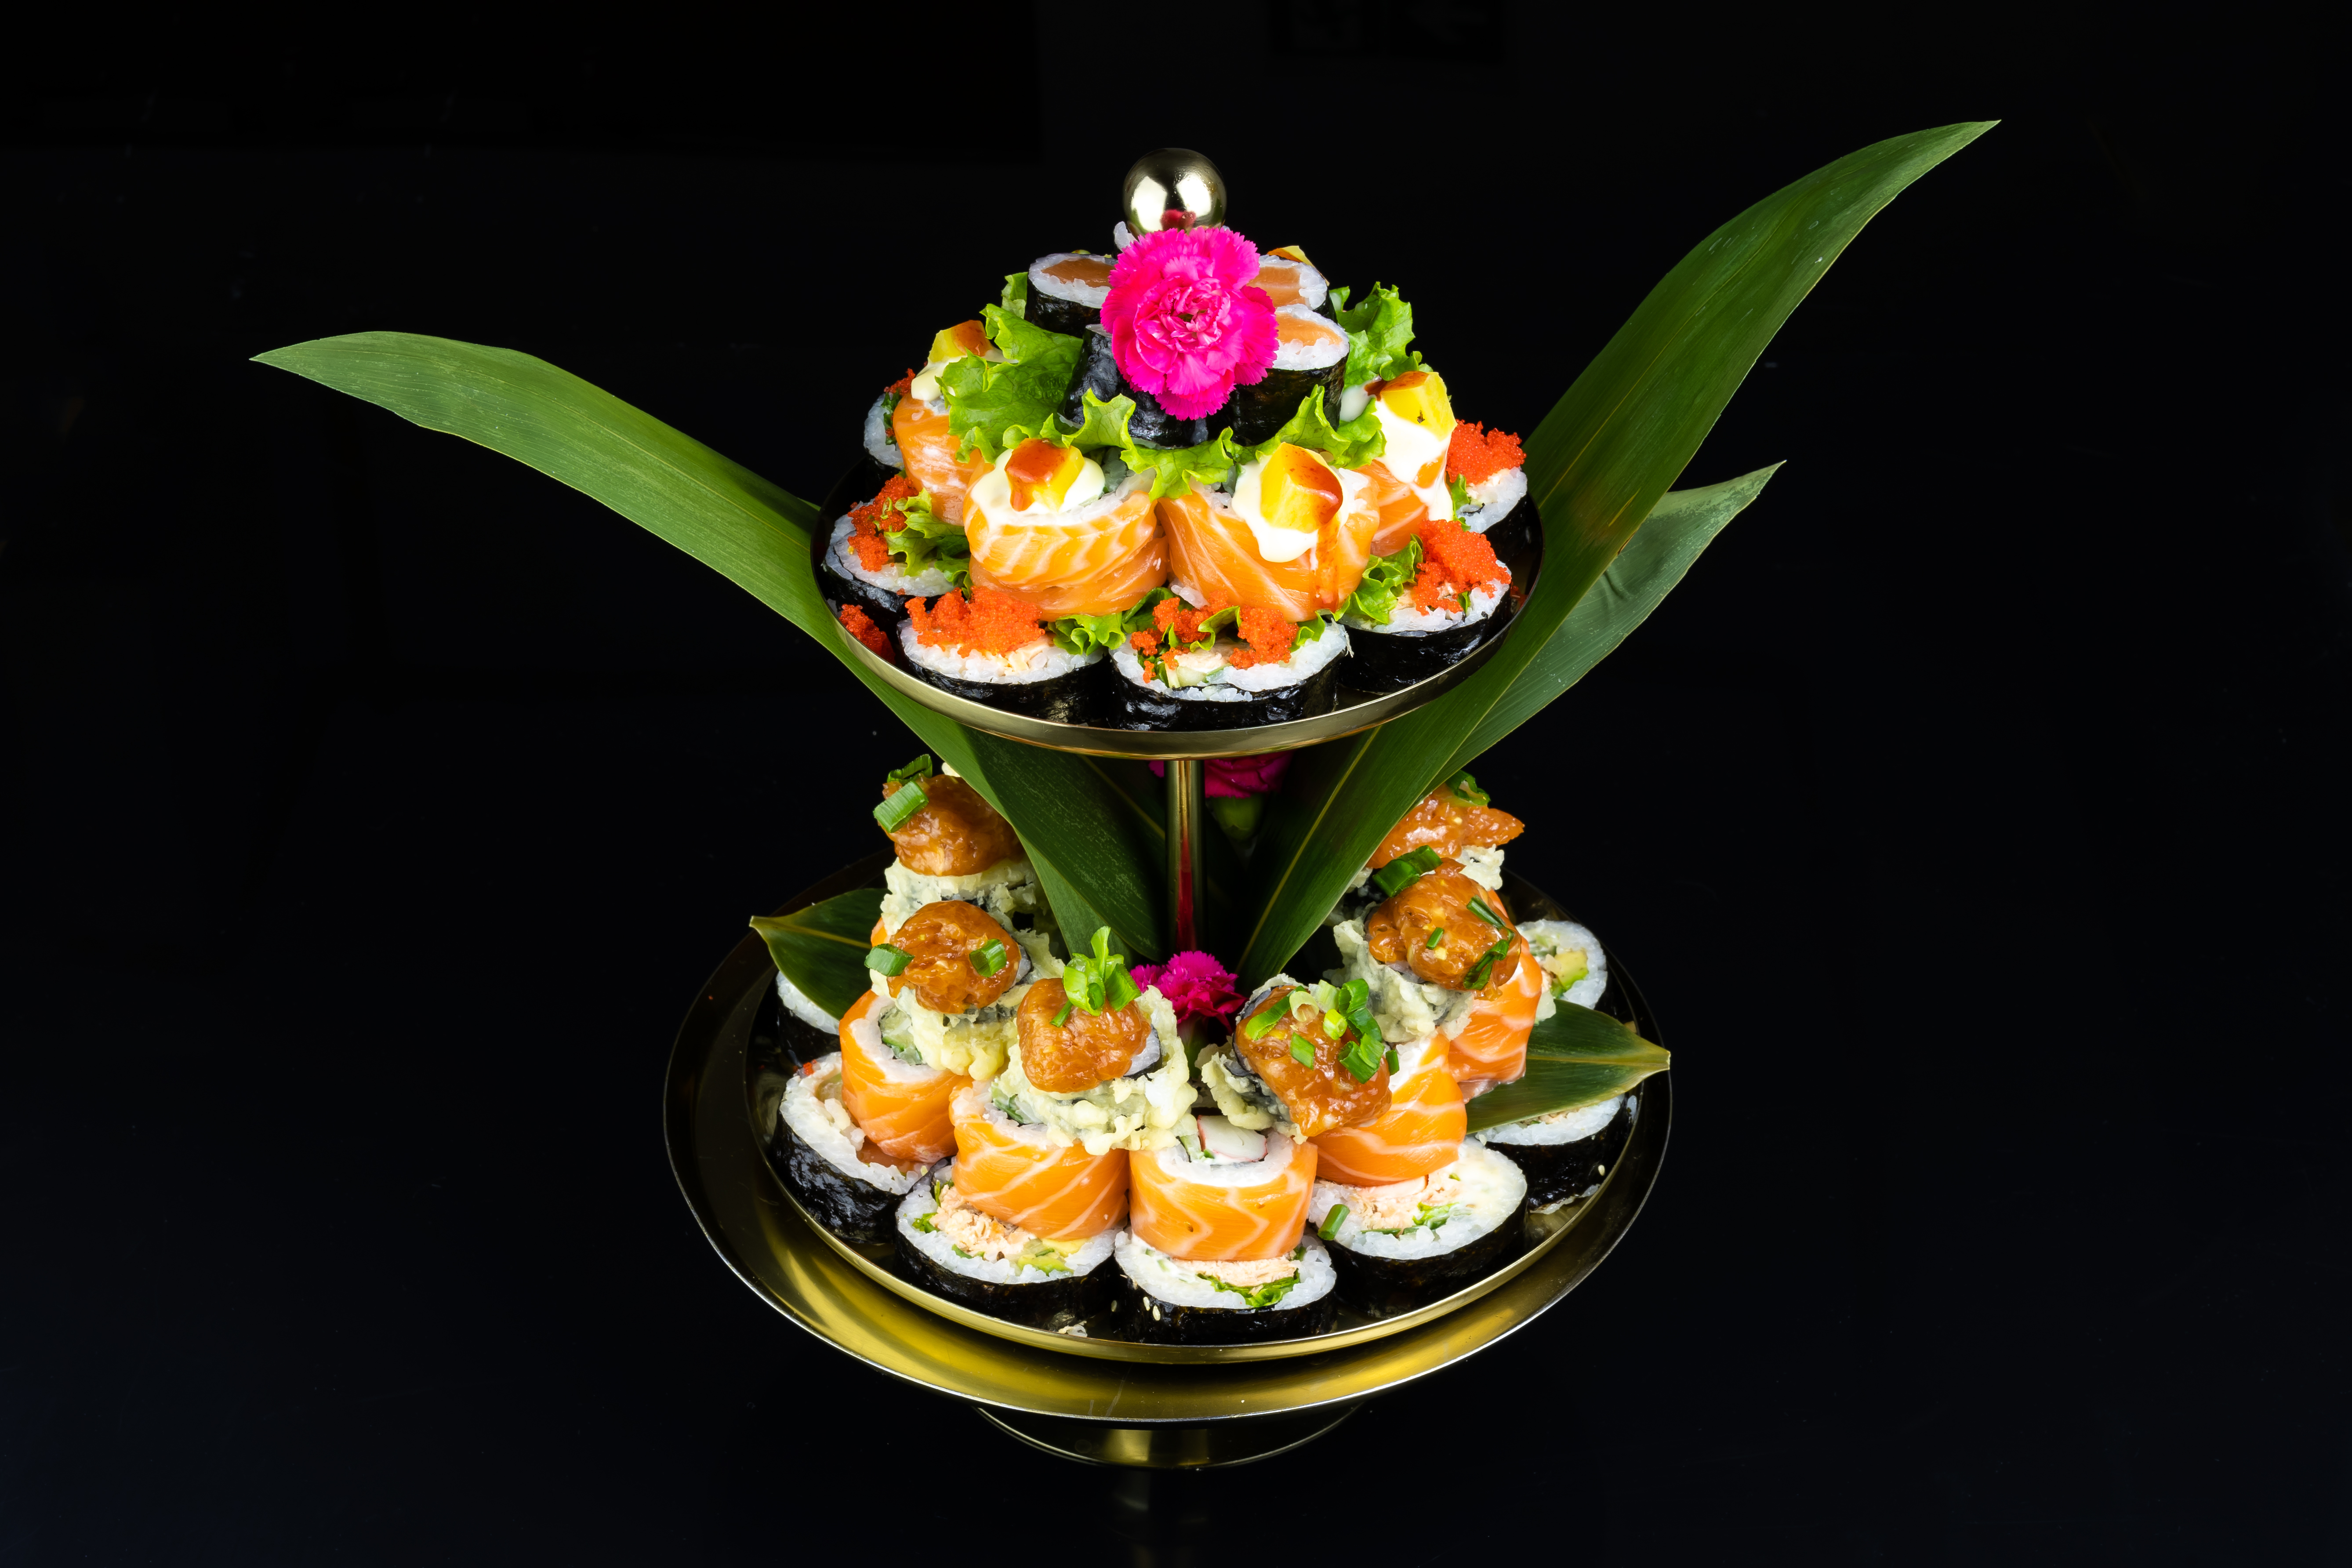 Tort sushi kompozycja kucharza 58 szt